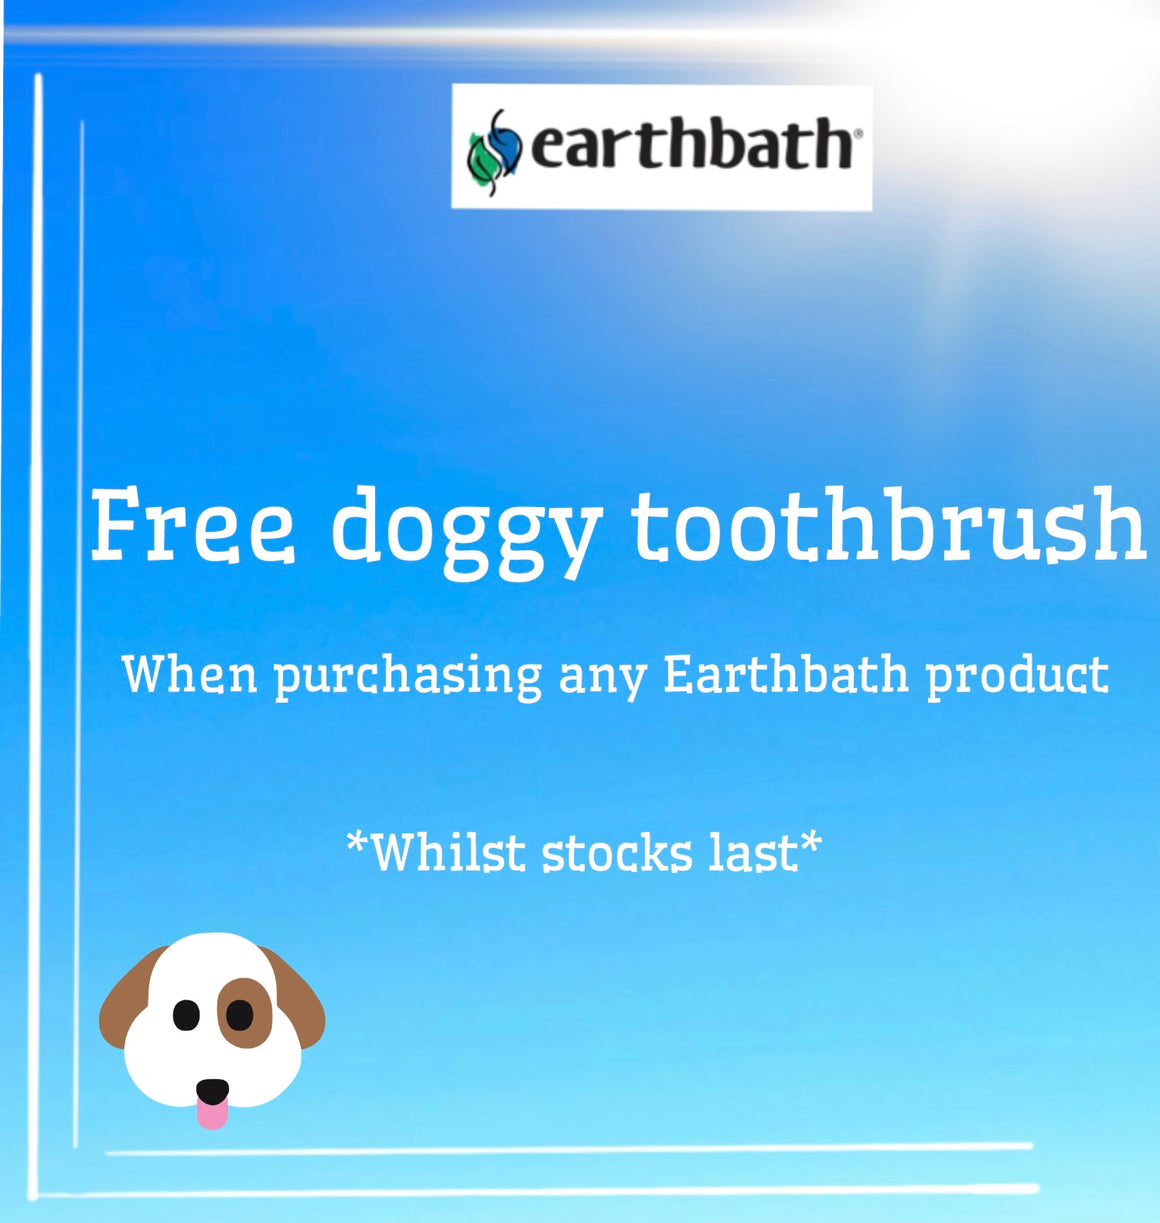 Cat Shampoo Earthbath - Hypo Allergenic 472ml